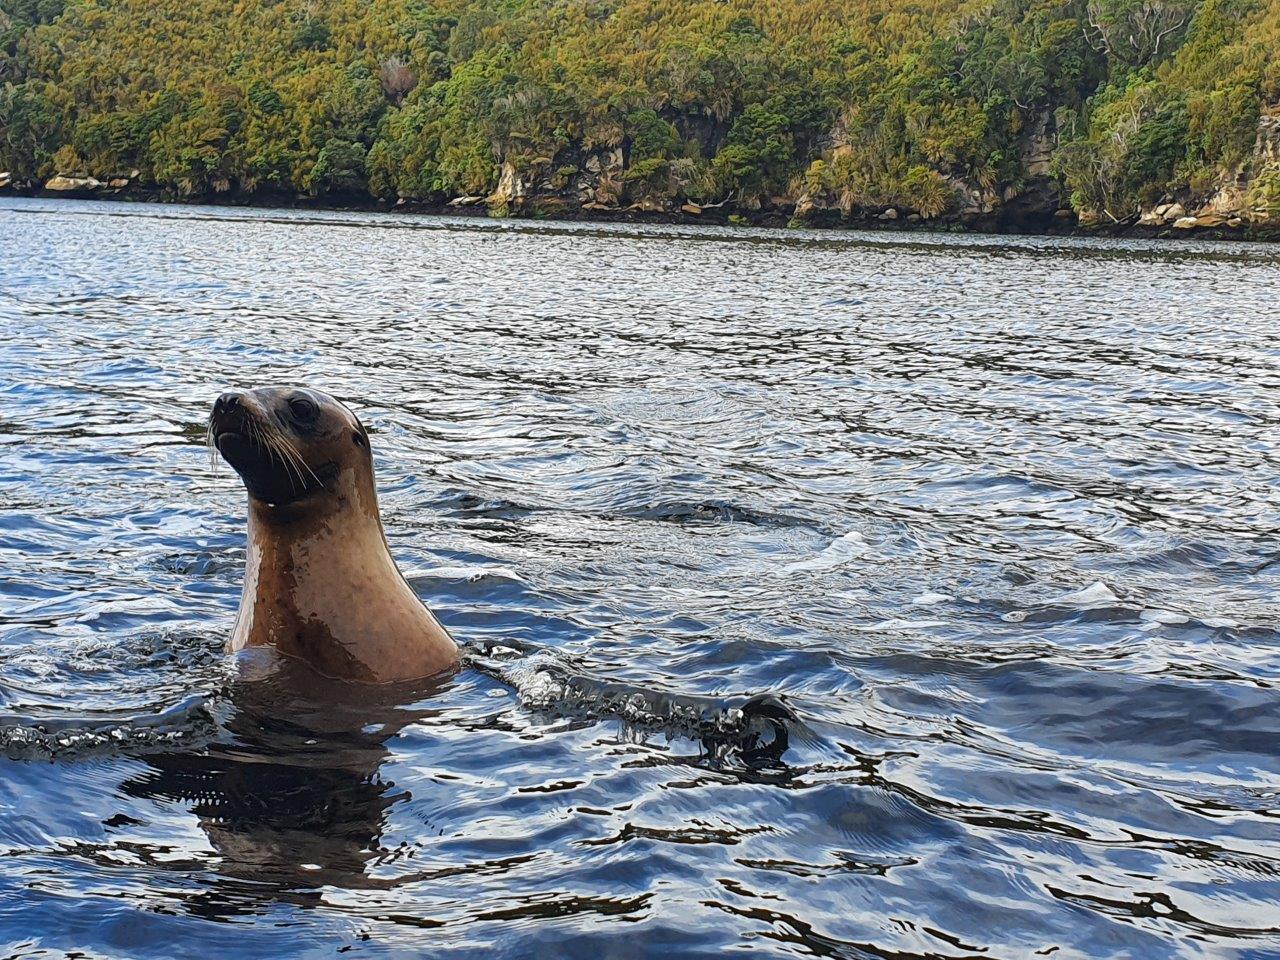 Seal checking out the kayak